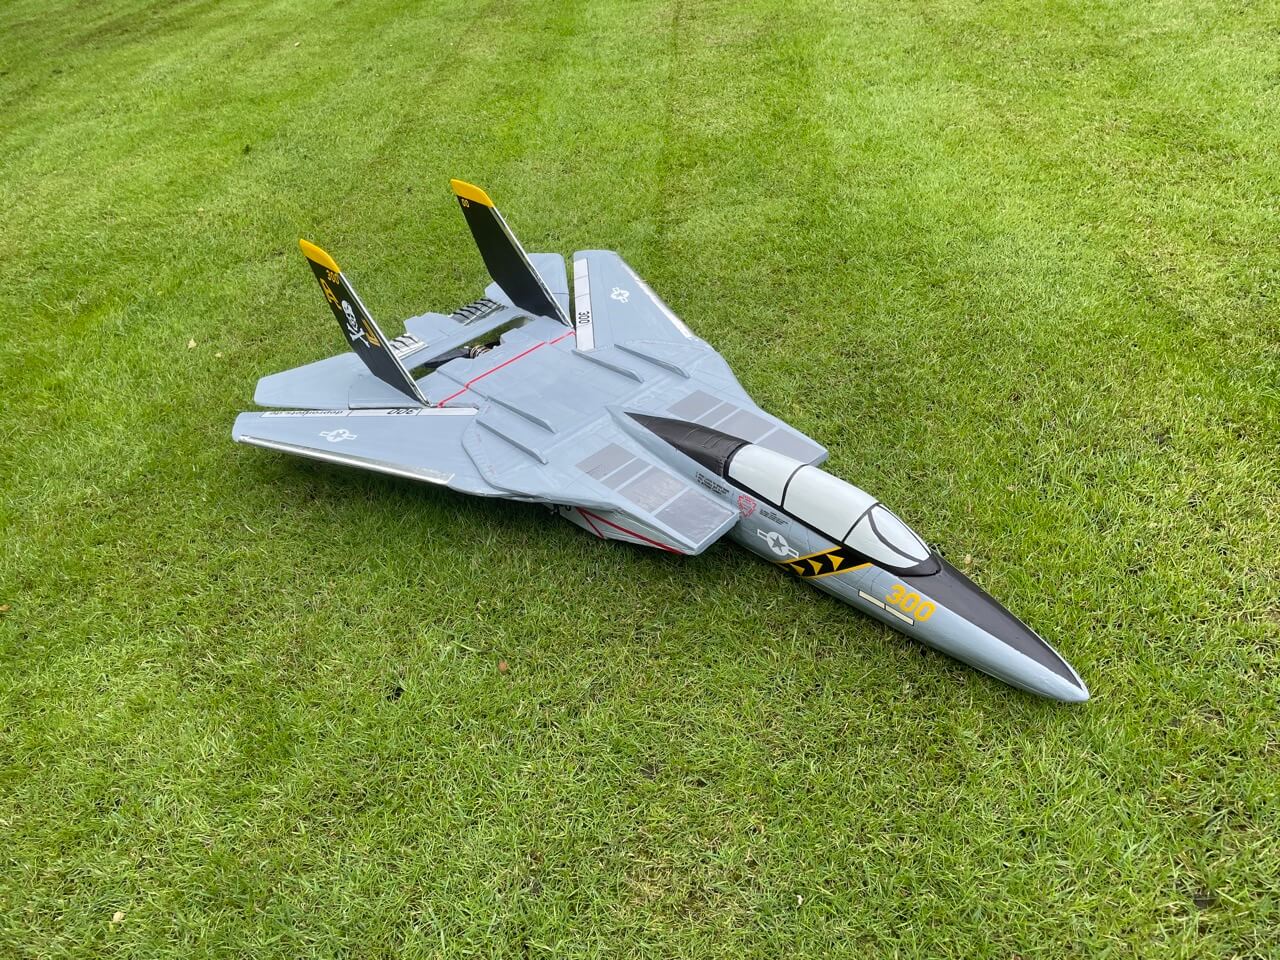 Modellflugzeug F-14 fertig auf dem Rasen